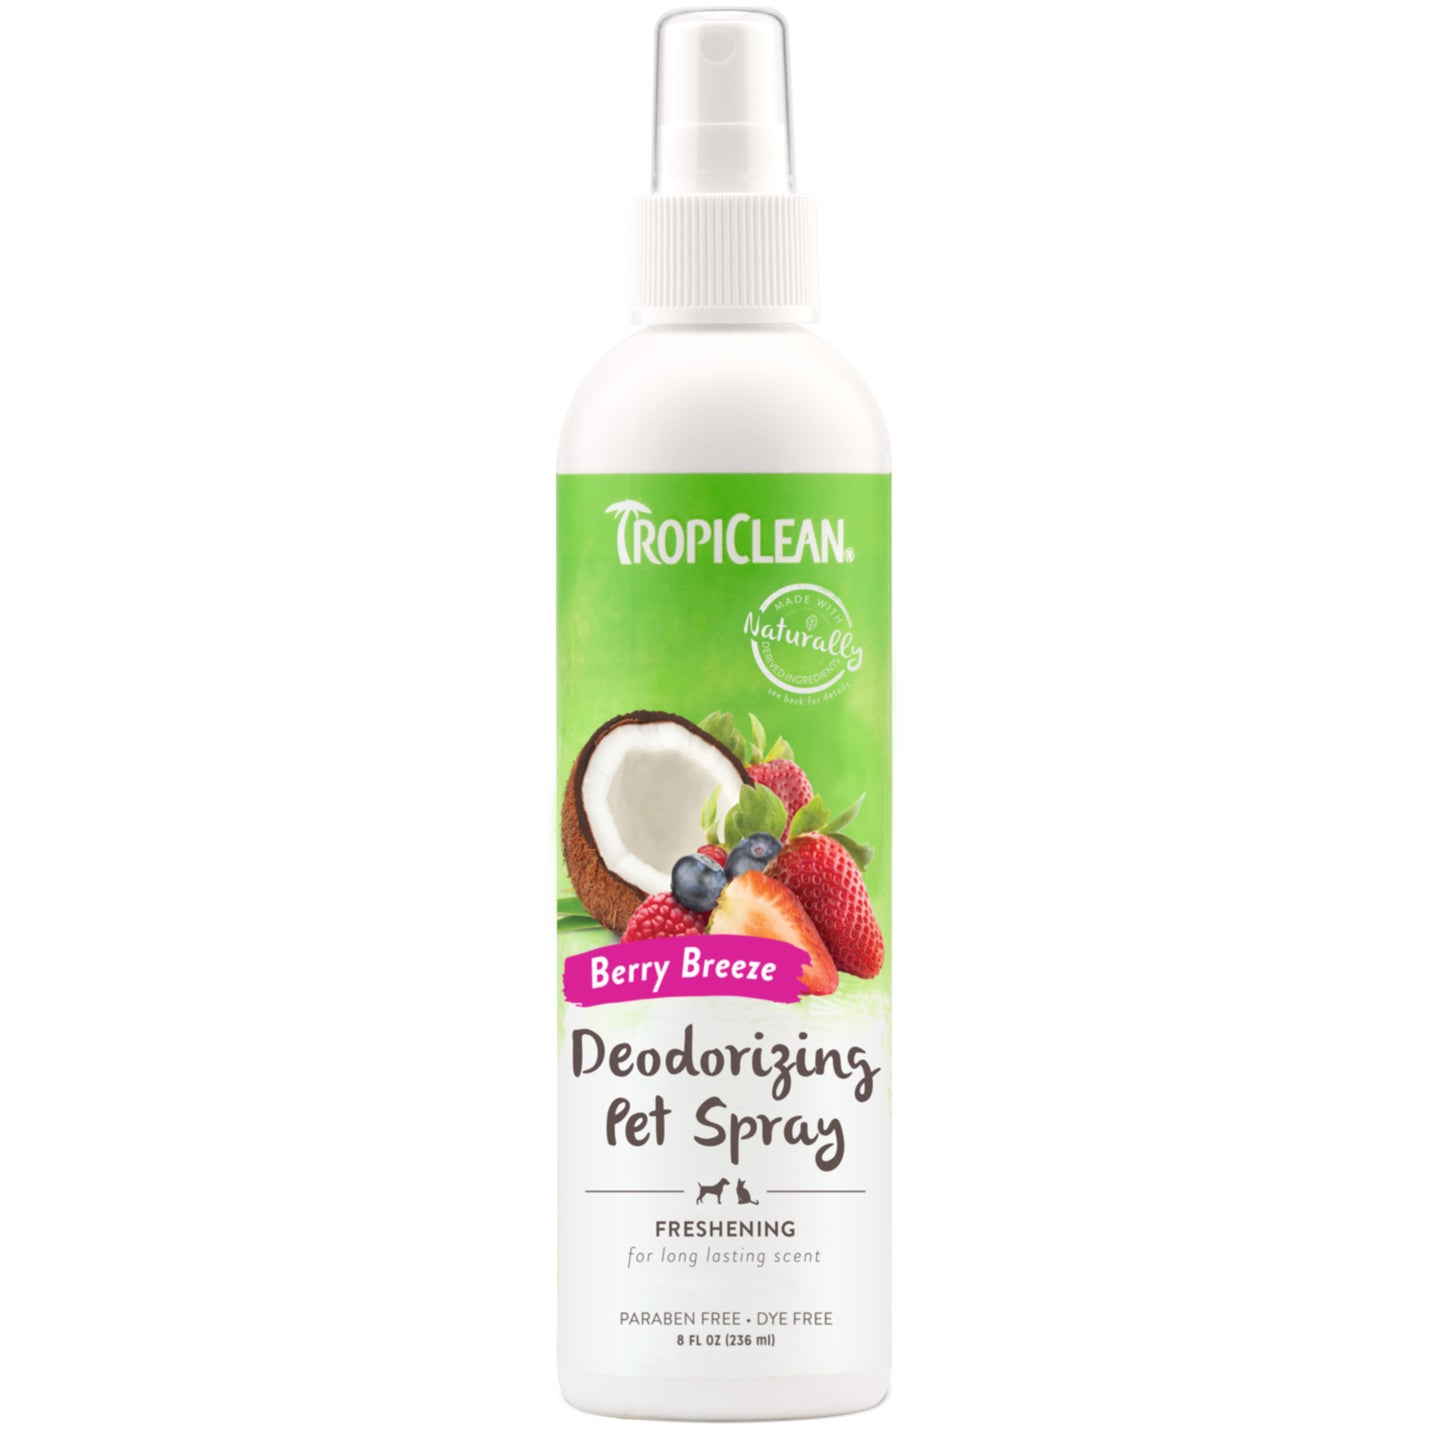 Tropiclean Berry Breeze Pet Spray